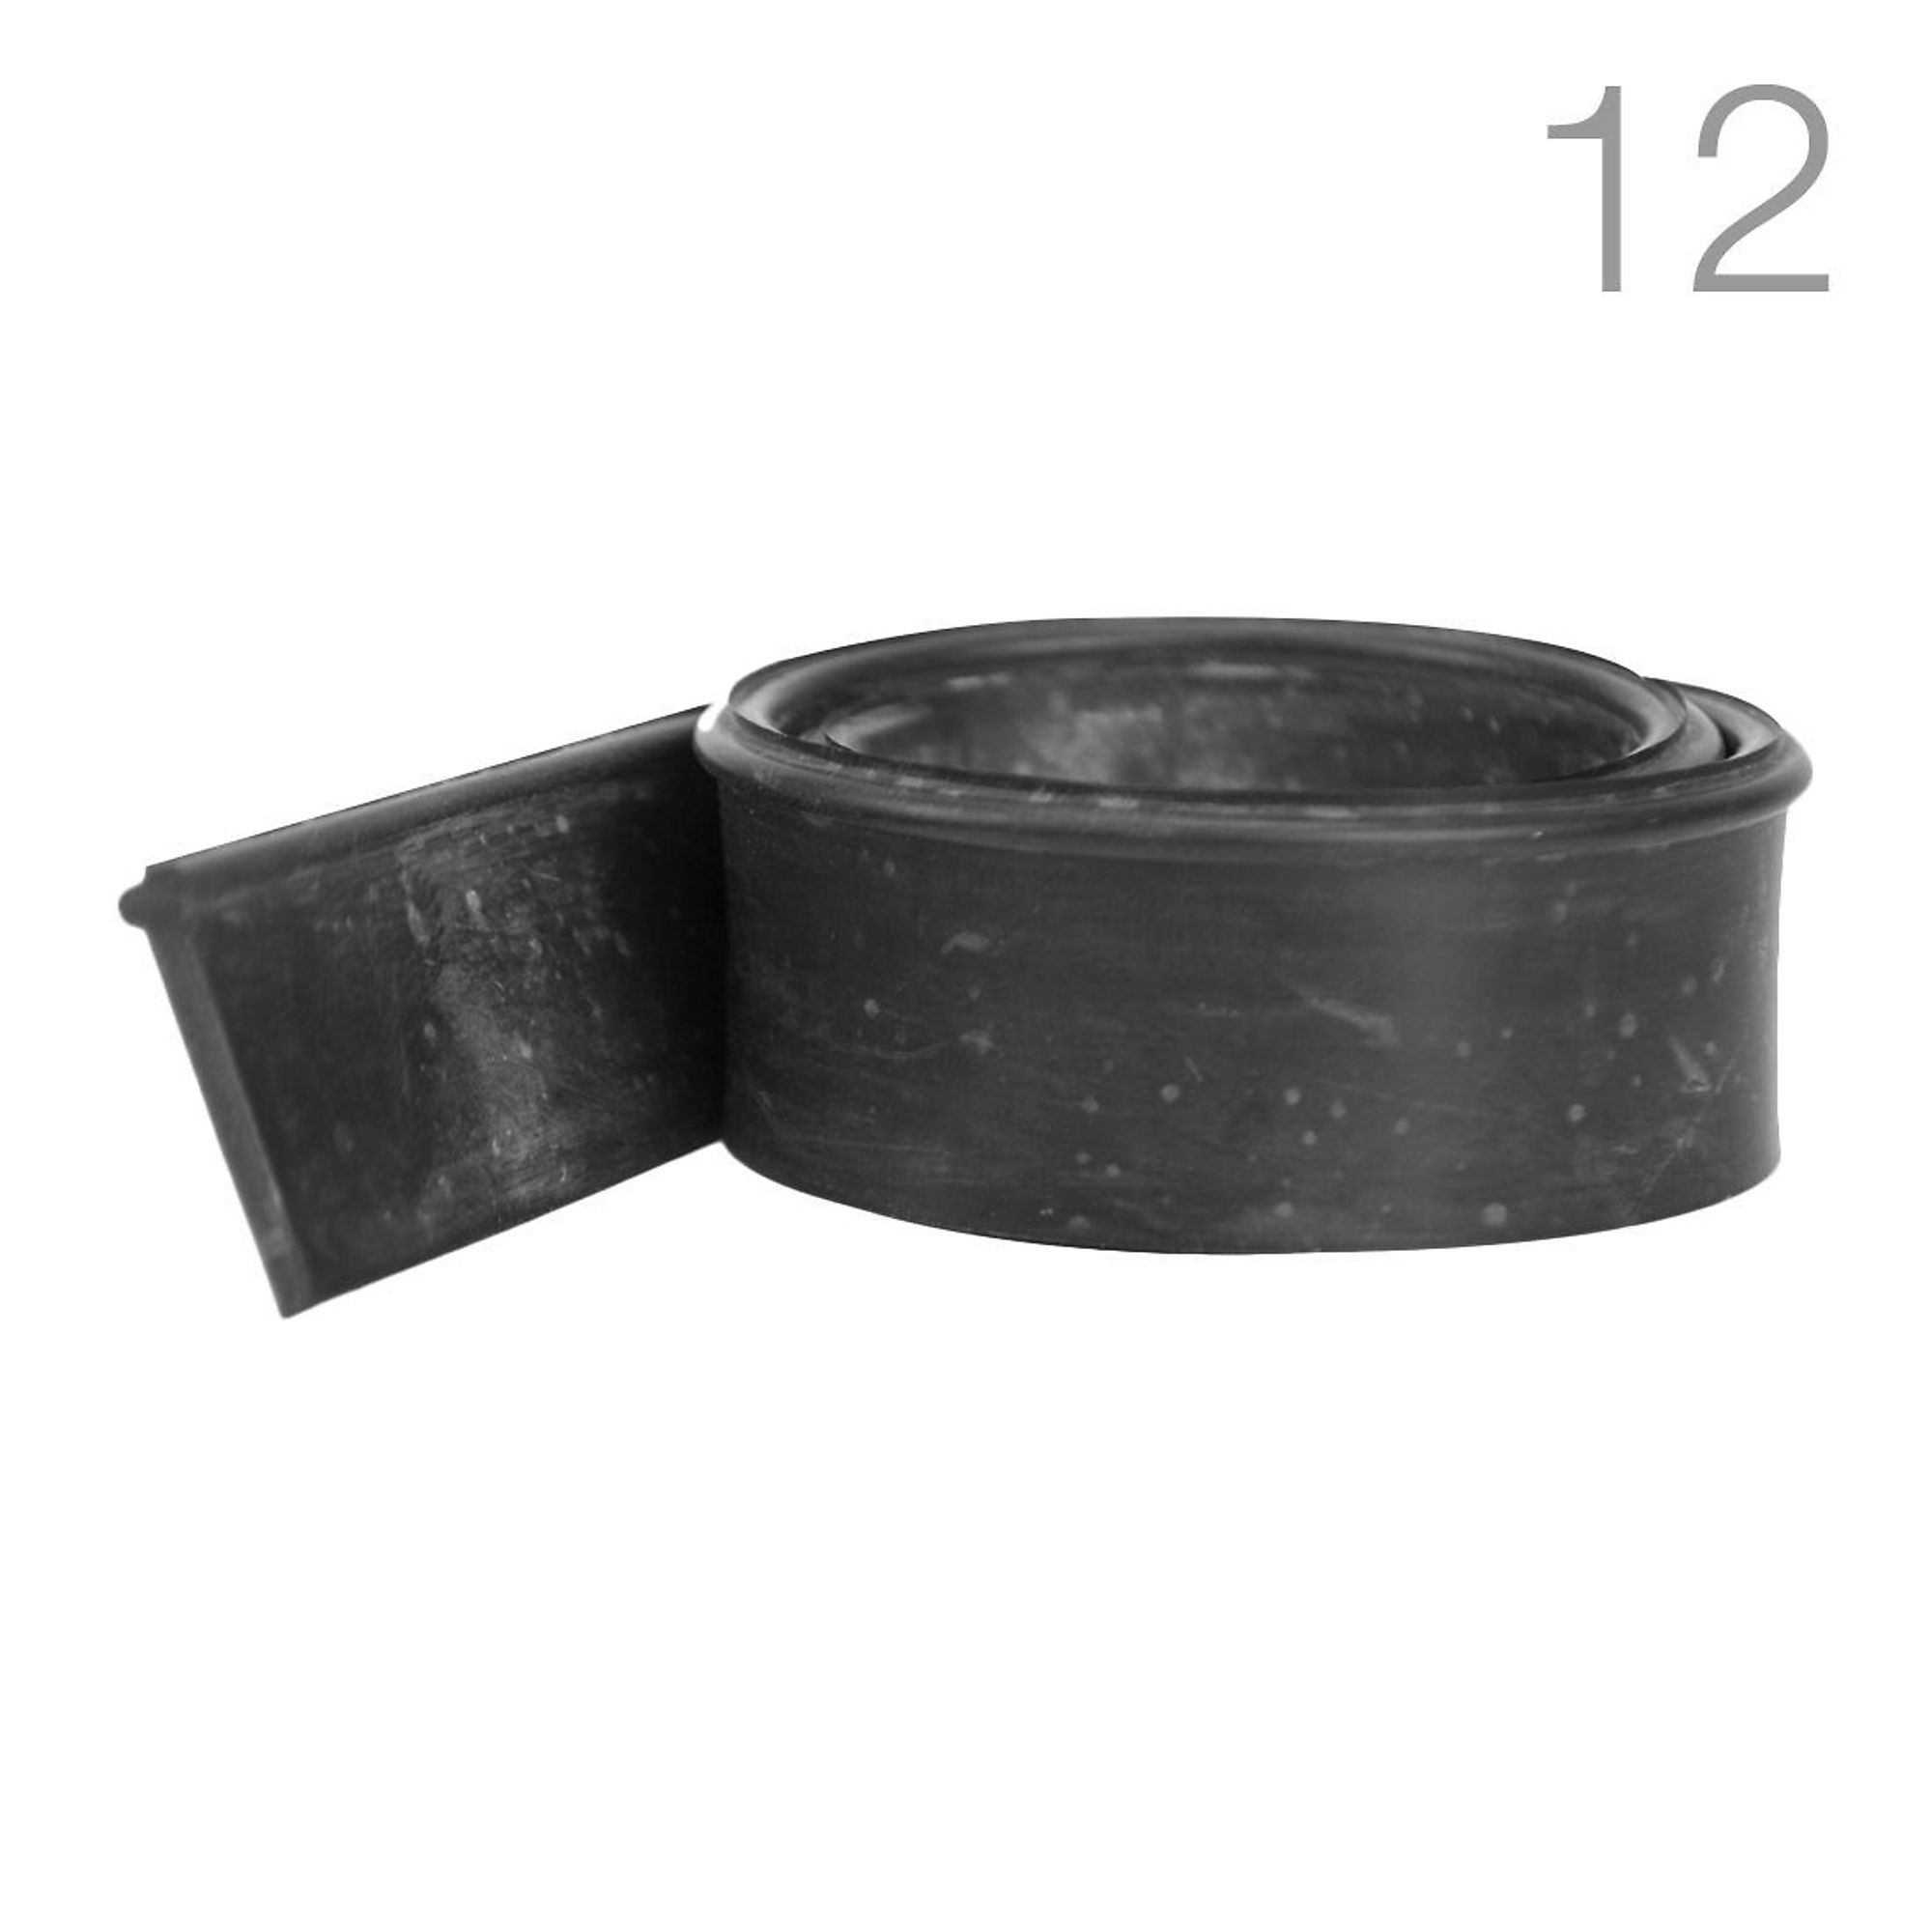 BlackDiamond, Flat Top Medium Squeegee Rubber 12 Pack - 10Inch, Model 012-05-141